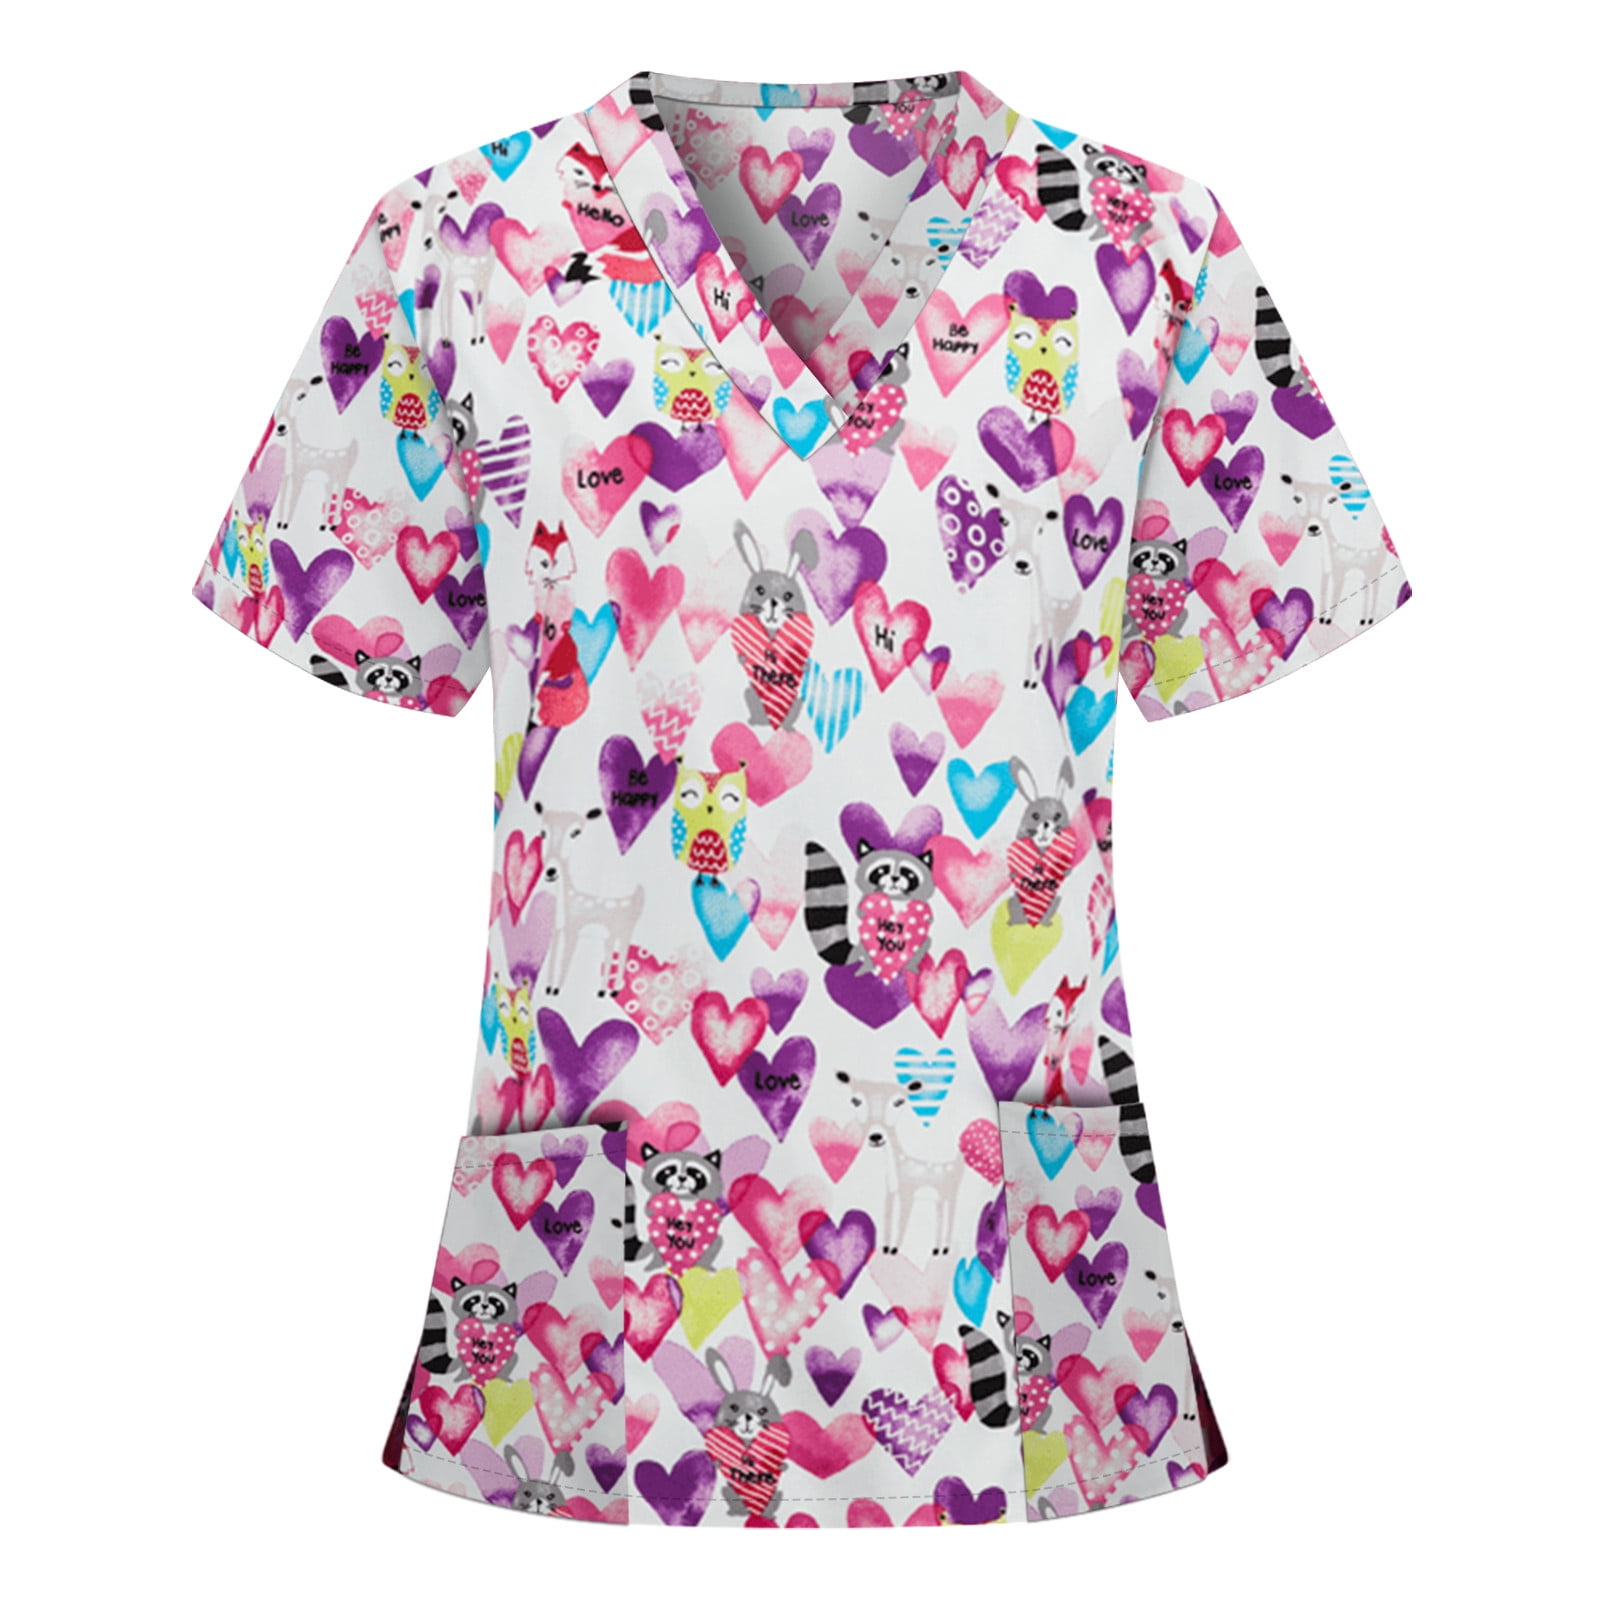 Aimik Women's Print Nurses Scrubs Tops Uniform Mock Wrap Top Workwear ...